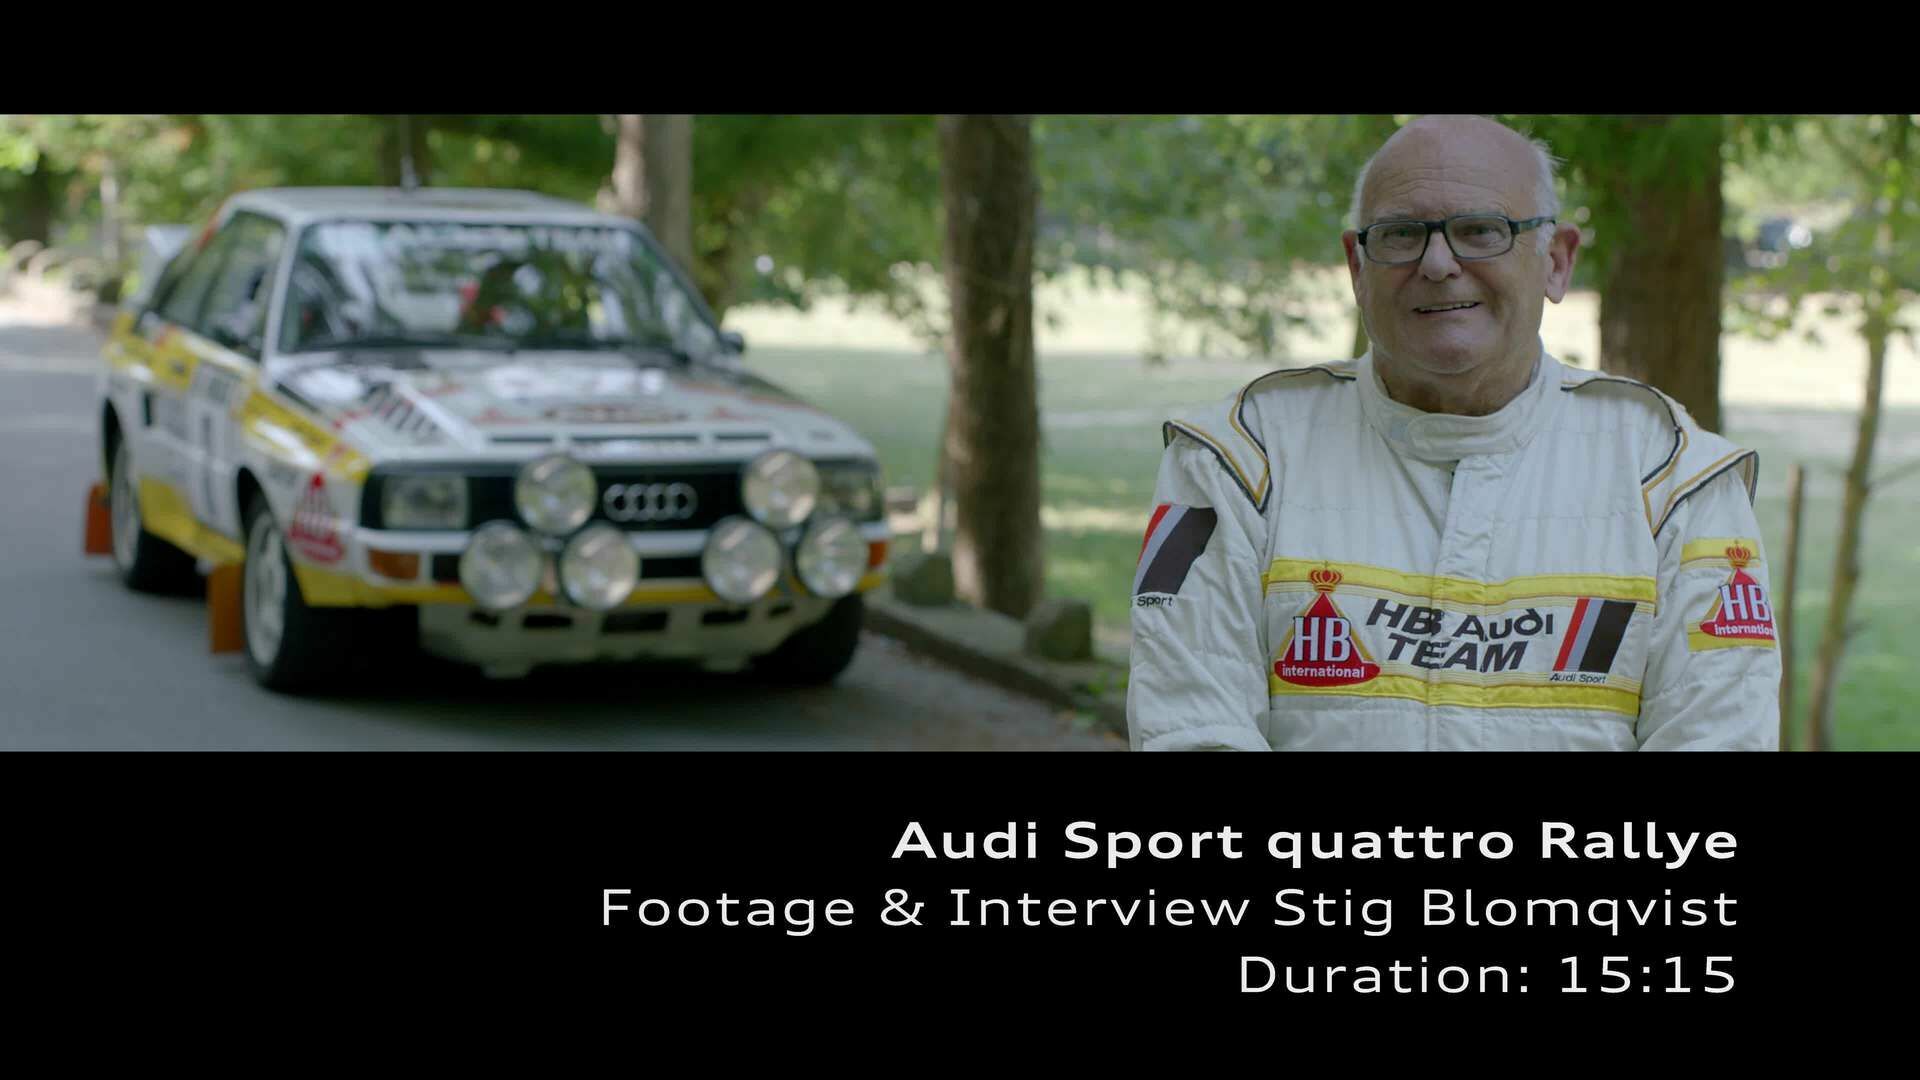 Footage: Audi Sport quattro Rallye and Stig Blomqvist